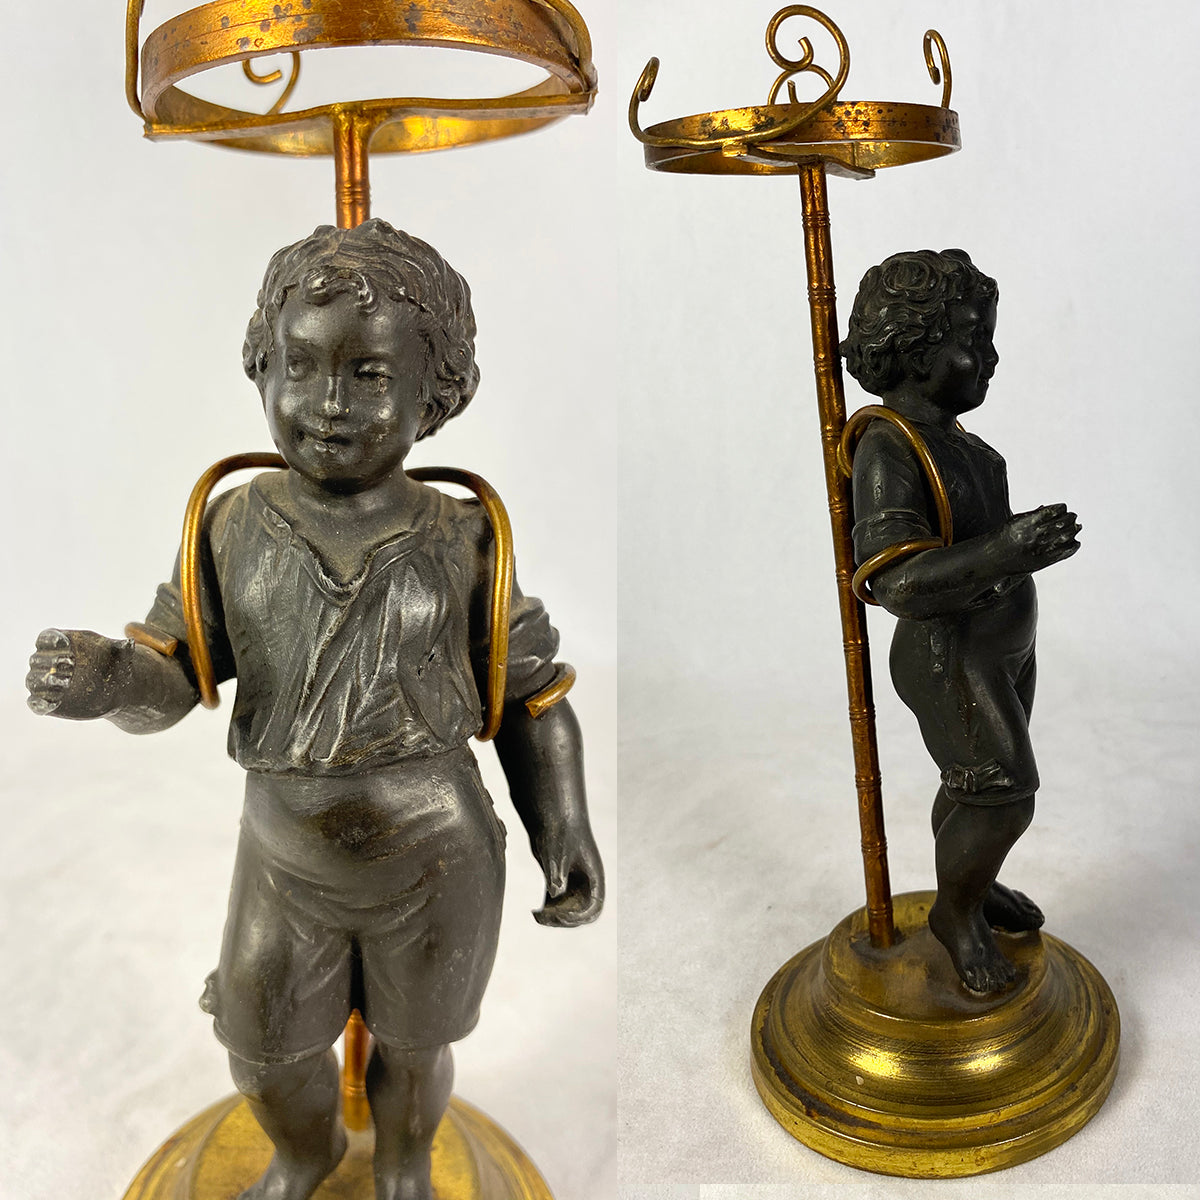 Antique French Napoleon III Candle Stand, Figural Like Blackamoor - a Boy